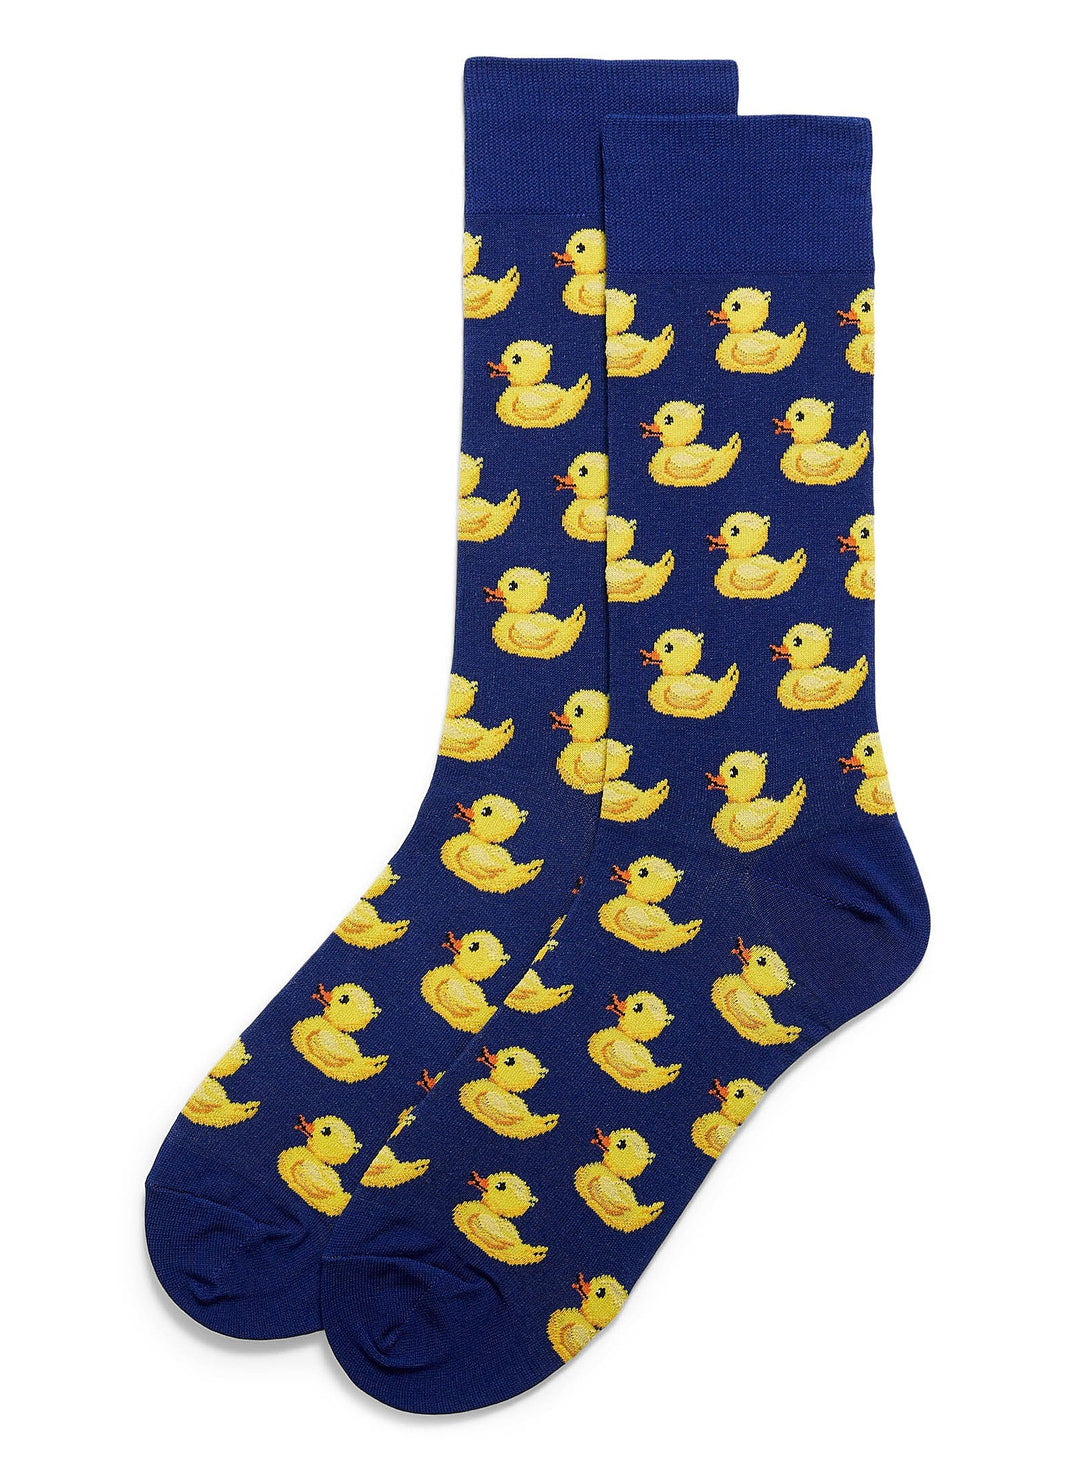 "Rubber Ducks" Cotton Crew Socks by Hot Sox